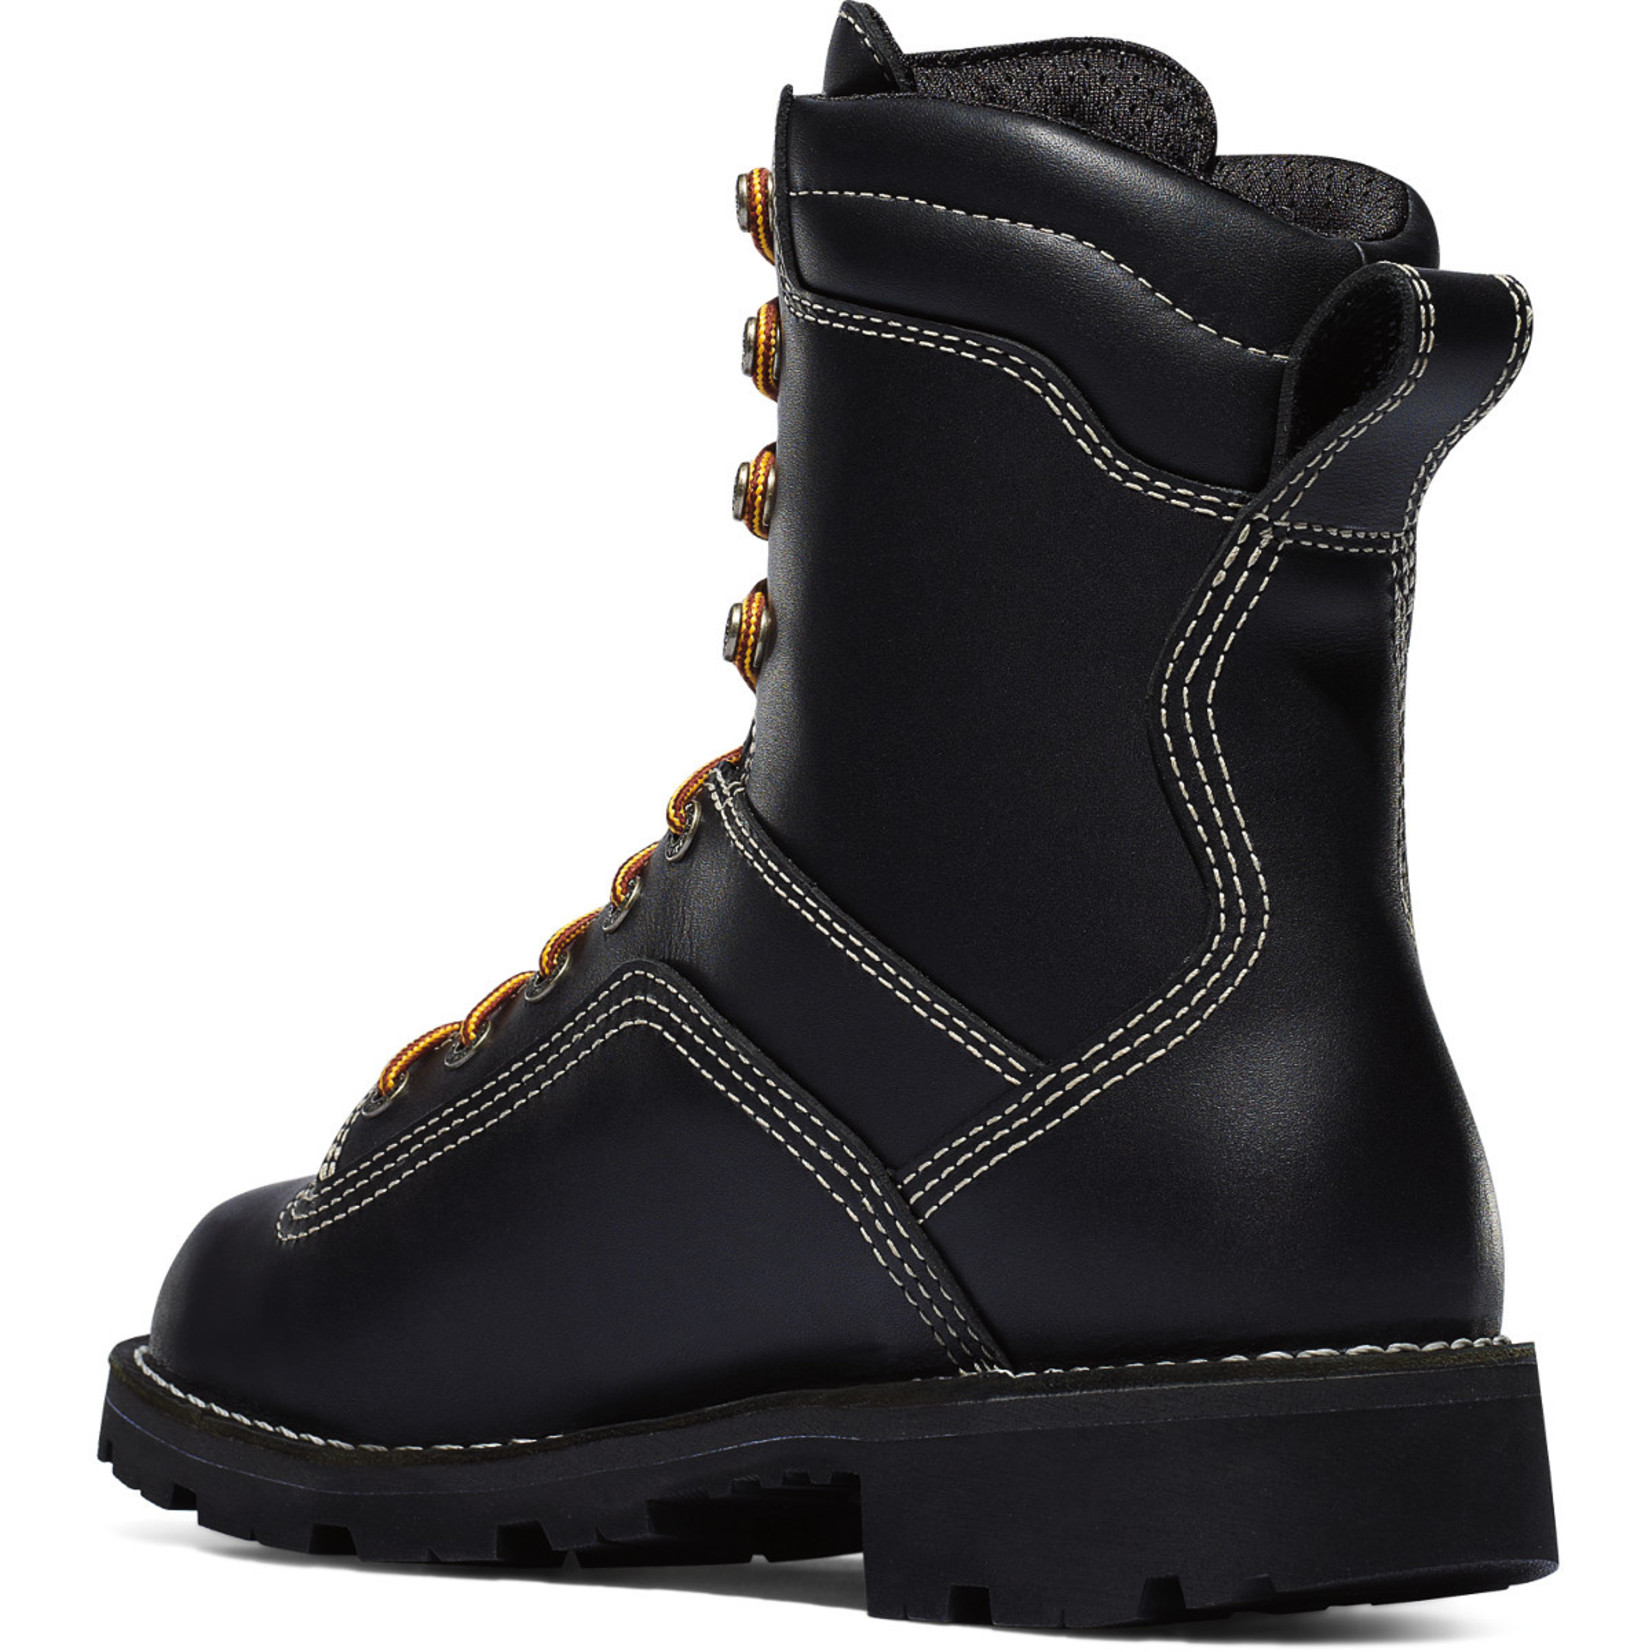 Danner Men's Quarry USA 17309 8" Soft Toe Work Boots Black Size 10EE 